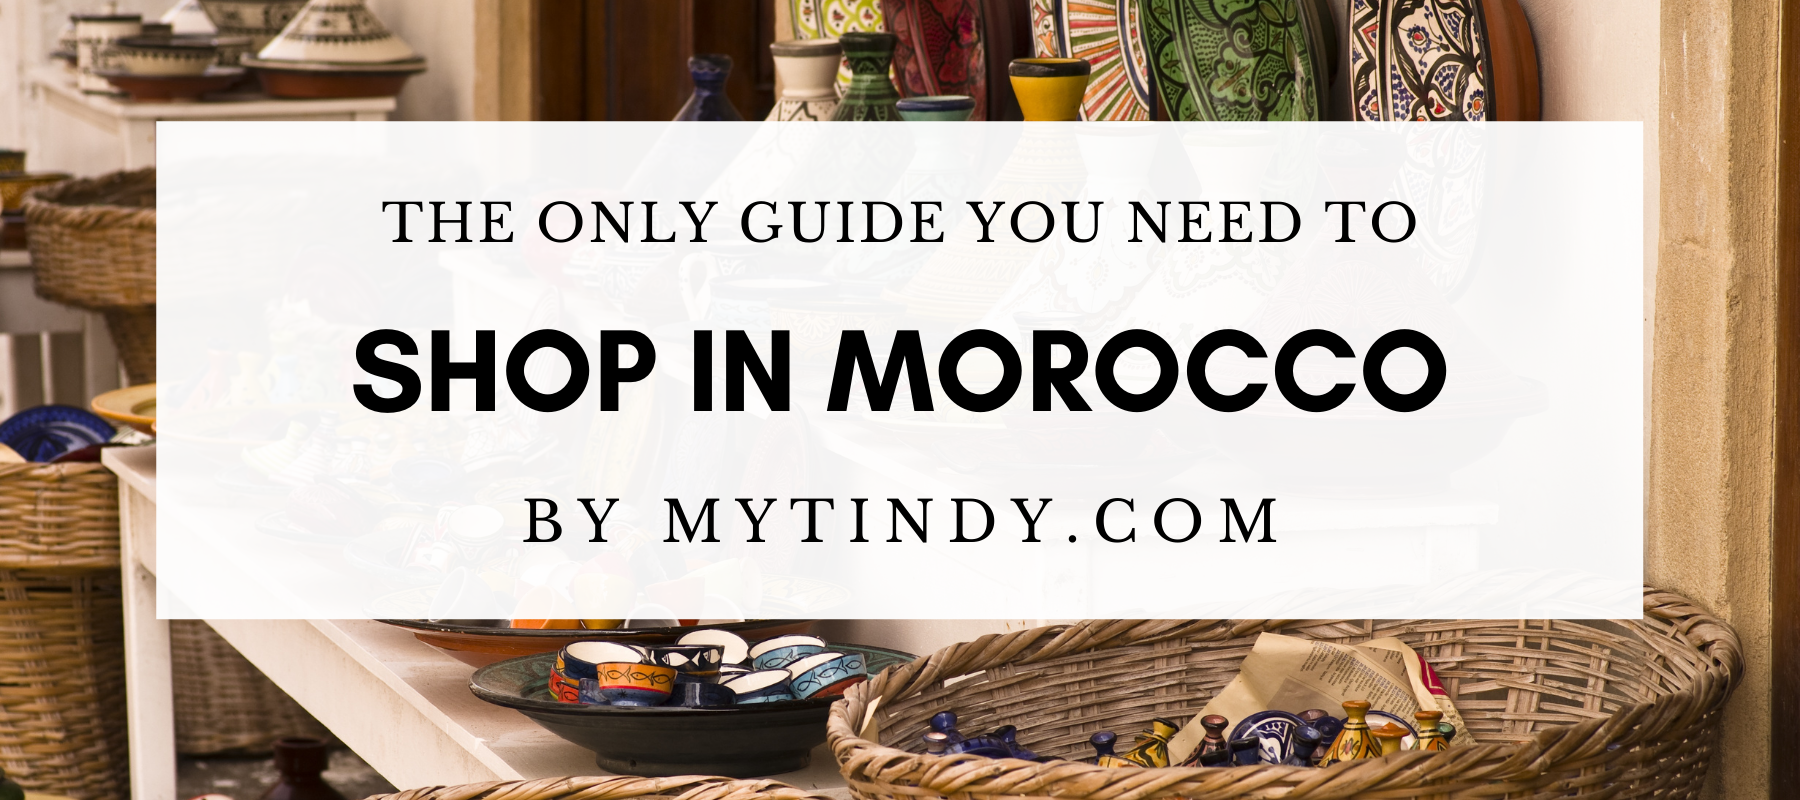 Moroccan shopping guide